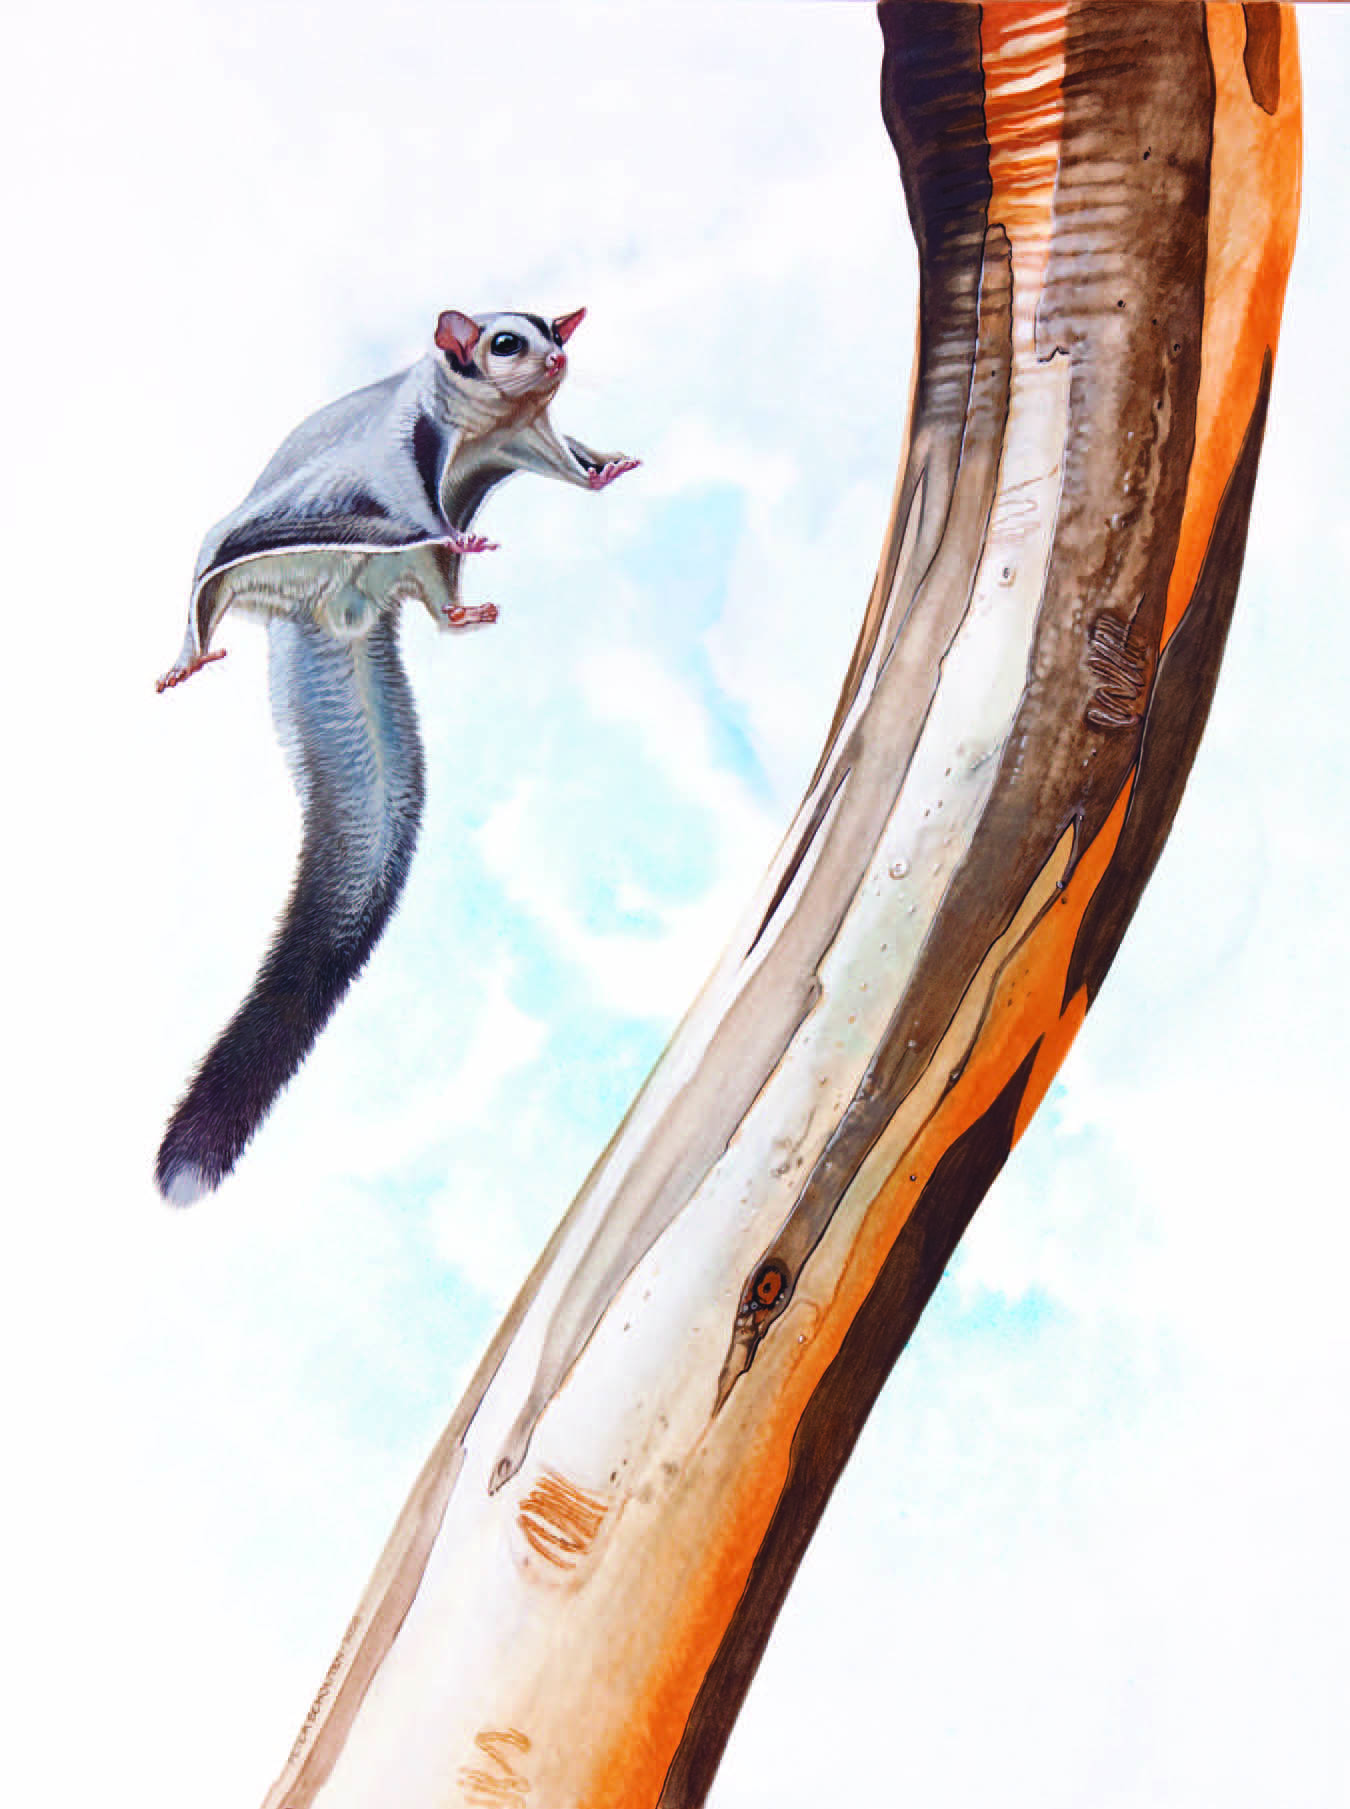 Sugar Glider / Petaurus breviceps